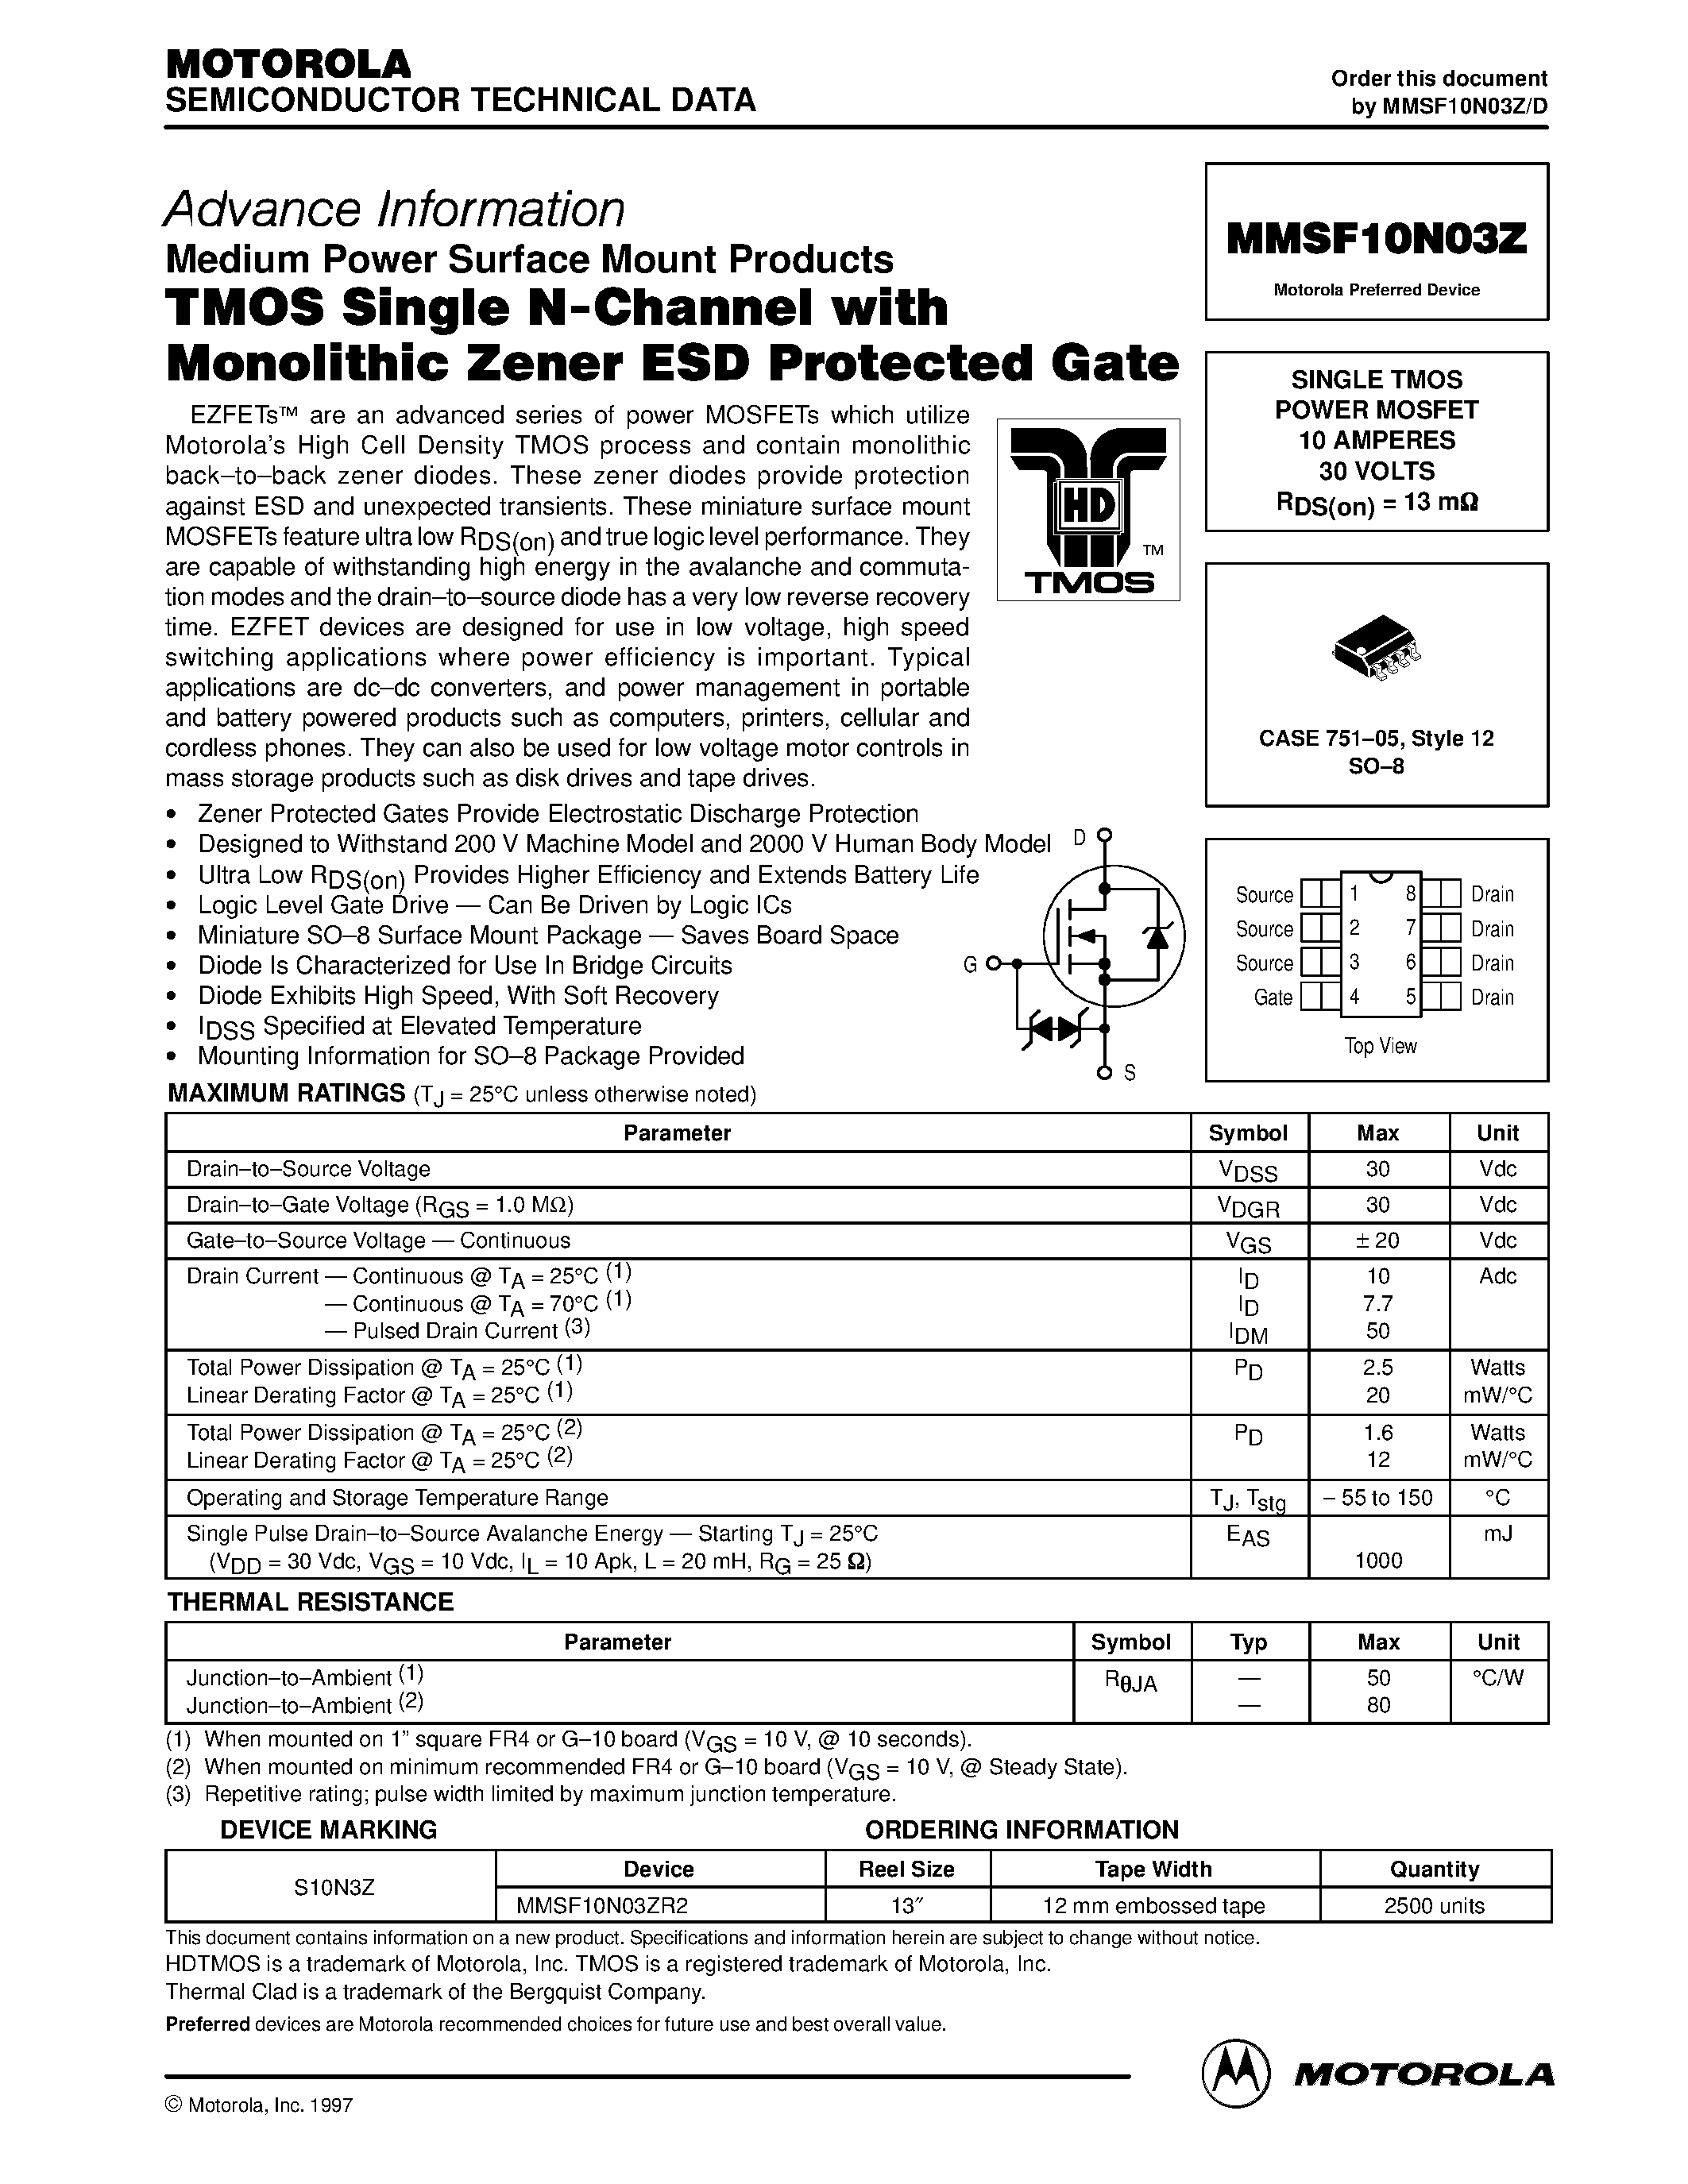 Datasheet MMSF10N03Z - SINGLE TMOS POWER MOSFET 10 AMPERES 30 VOLTS page 1